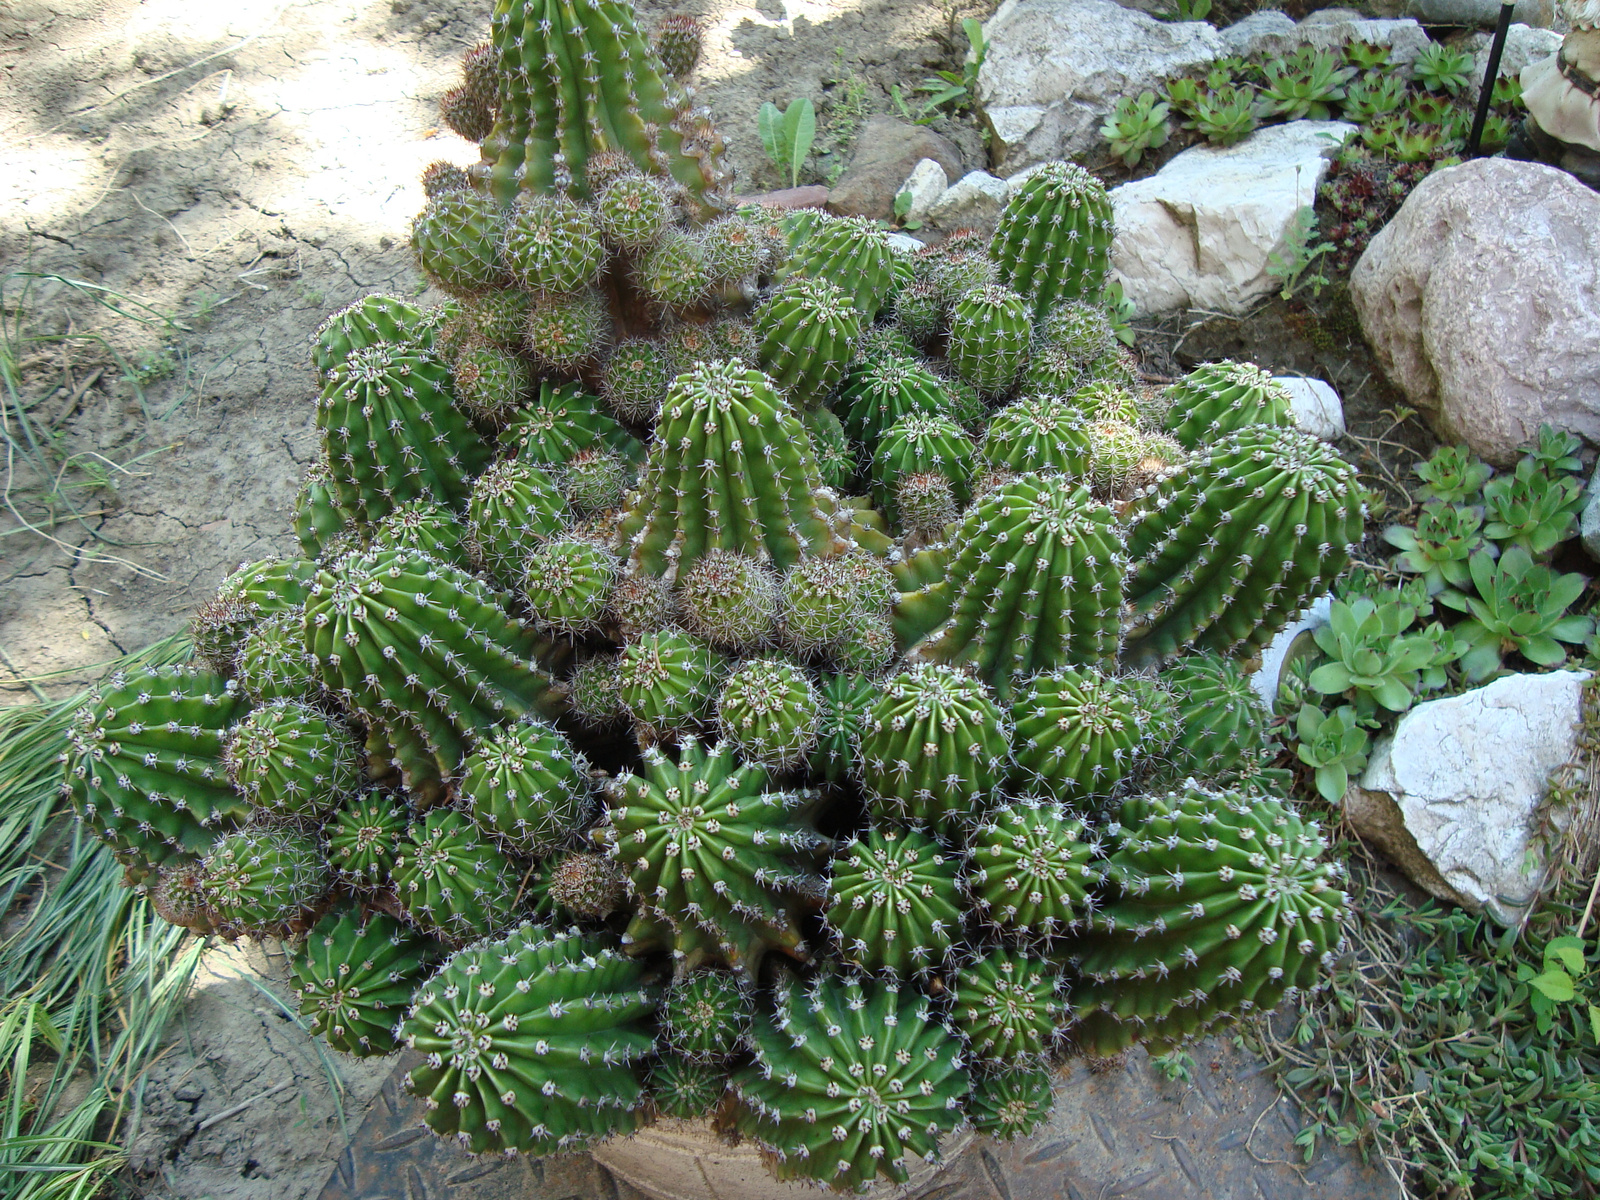 Felnőtt kaktuszom